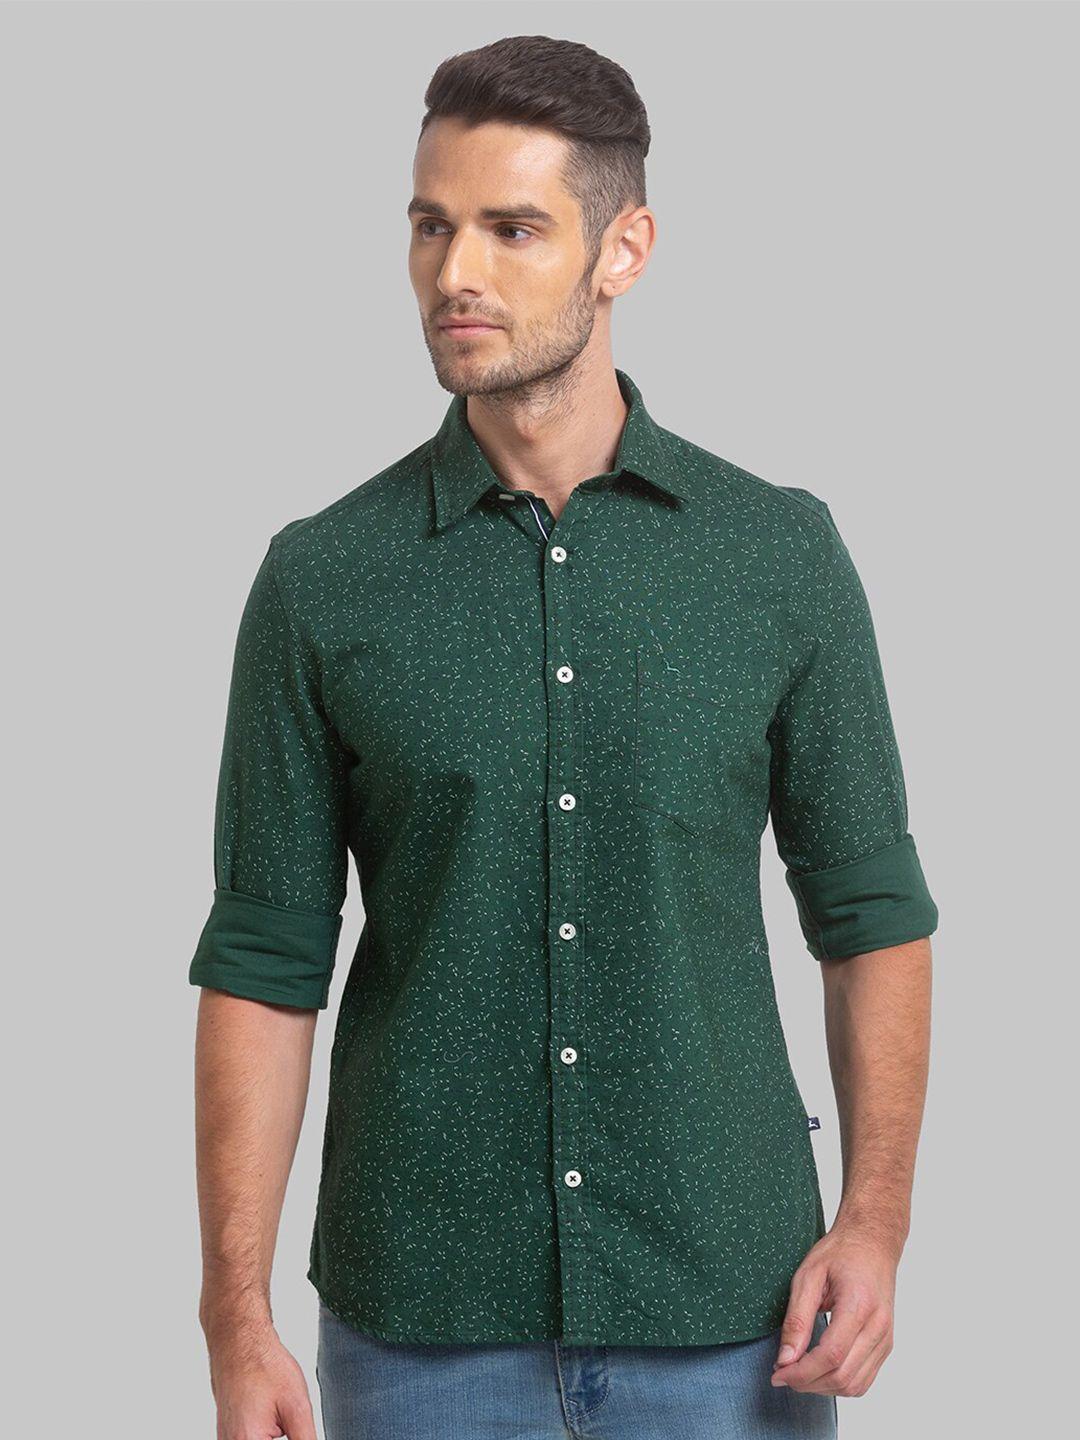 parx-men-slim-fit-printed-cotton-casual-shirt